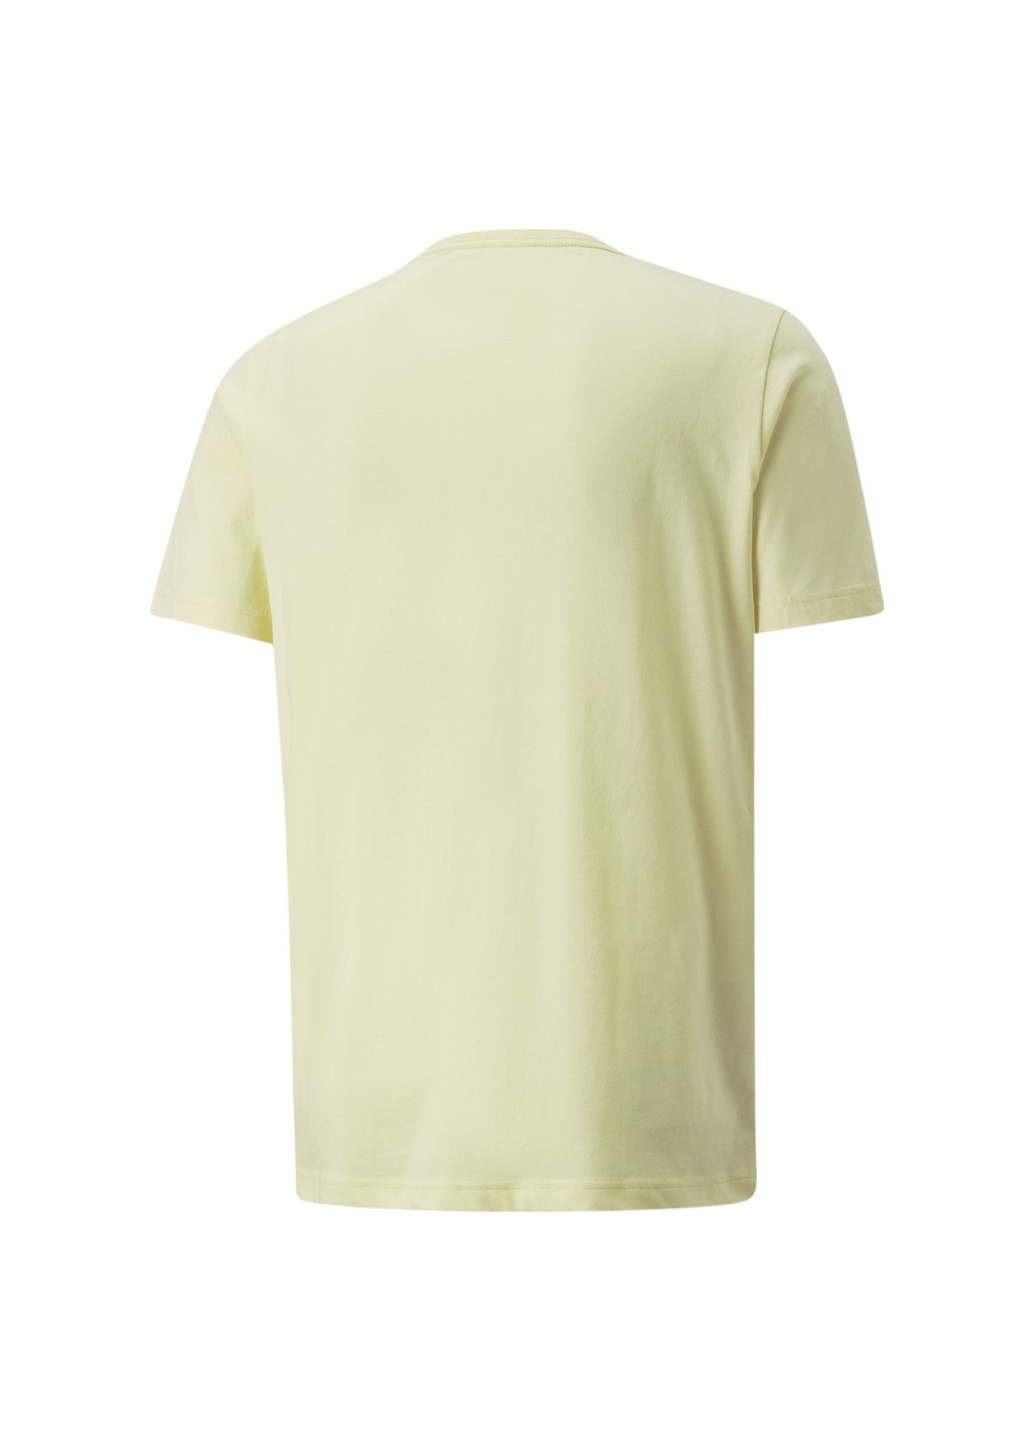 Желтая футболка essentials logo men's tee Puma